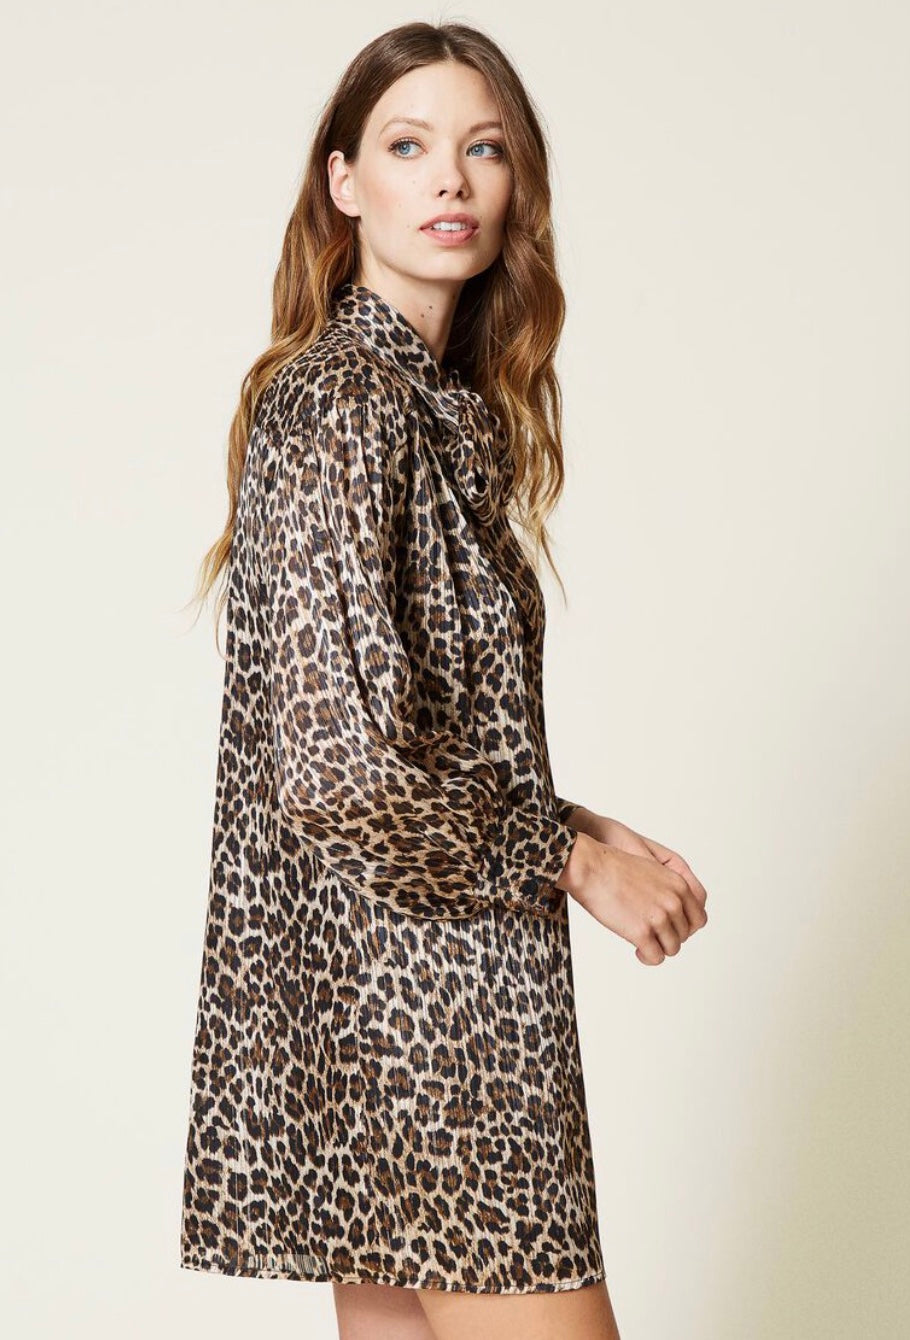 Twinset Actitude	Animal print lurex dress	Leopard